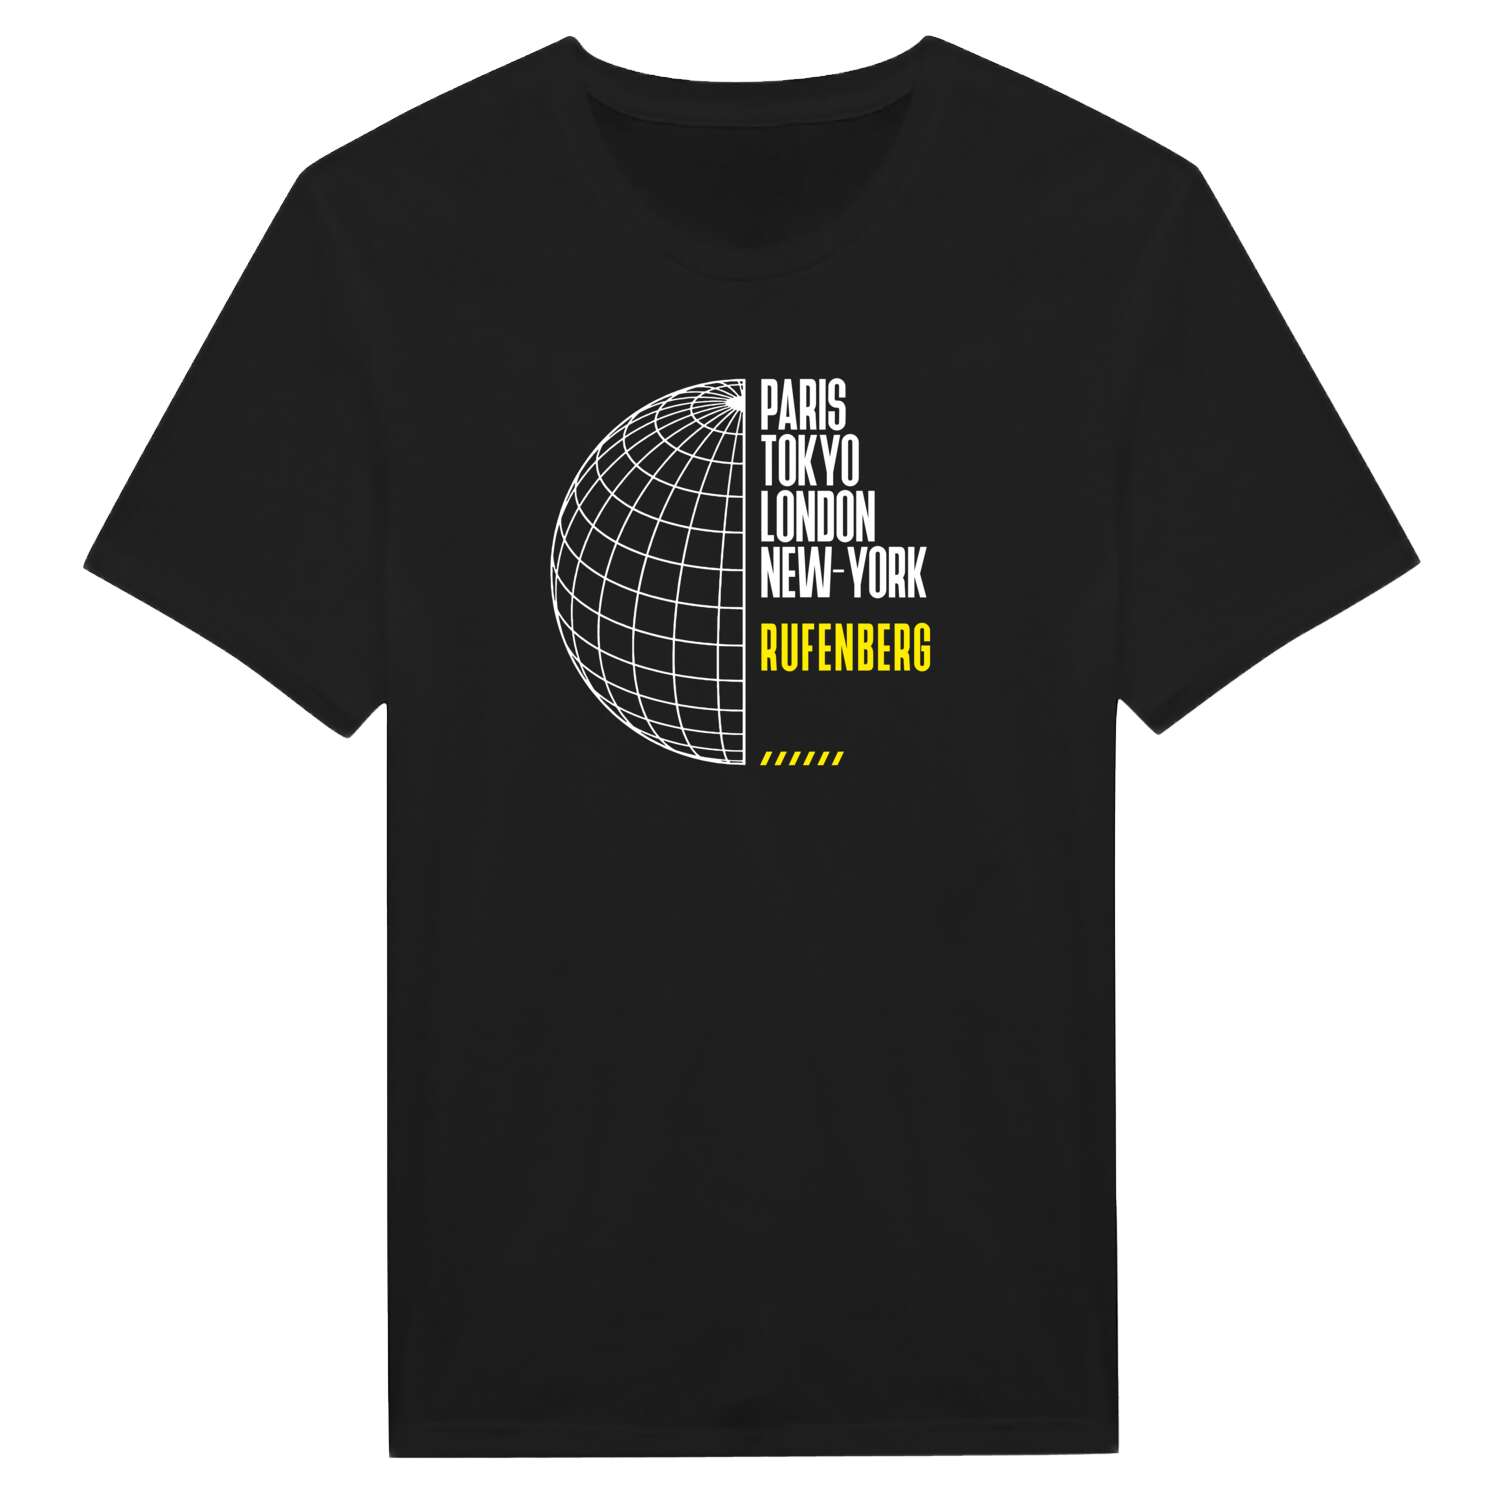 Rufenberg T-Shirt »Paris Tokyo London«